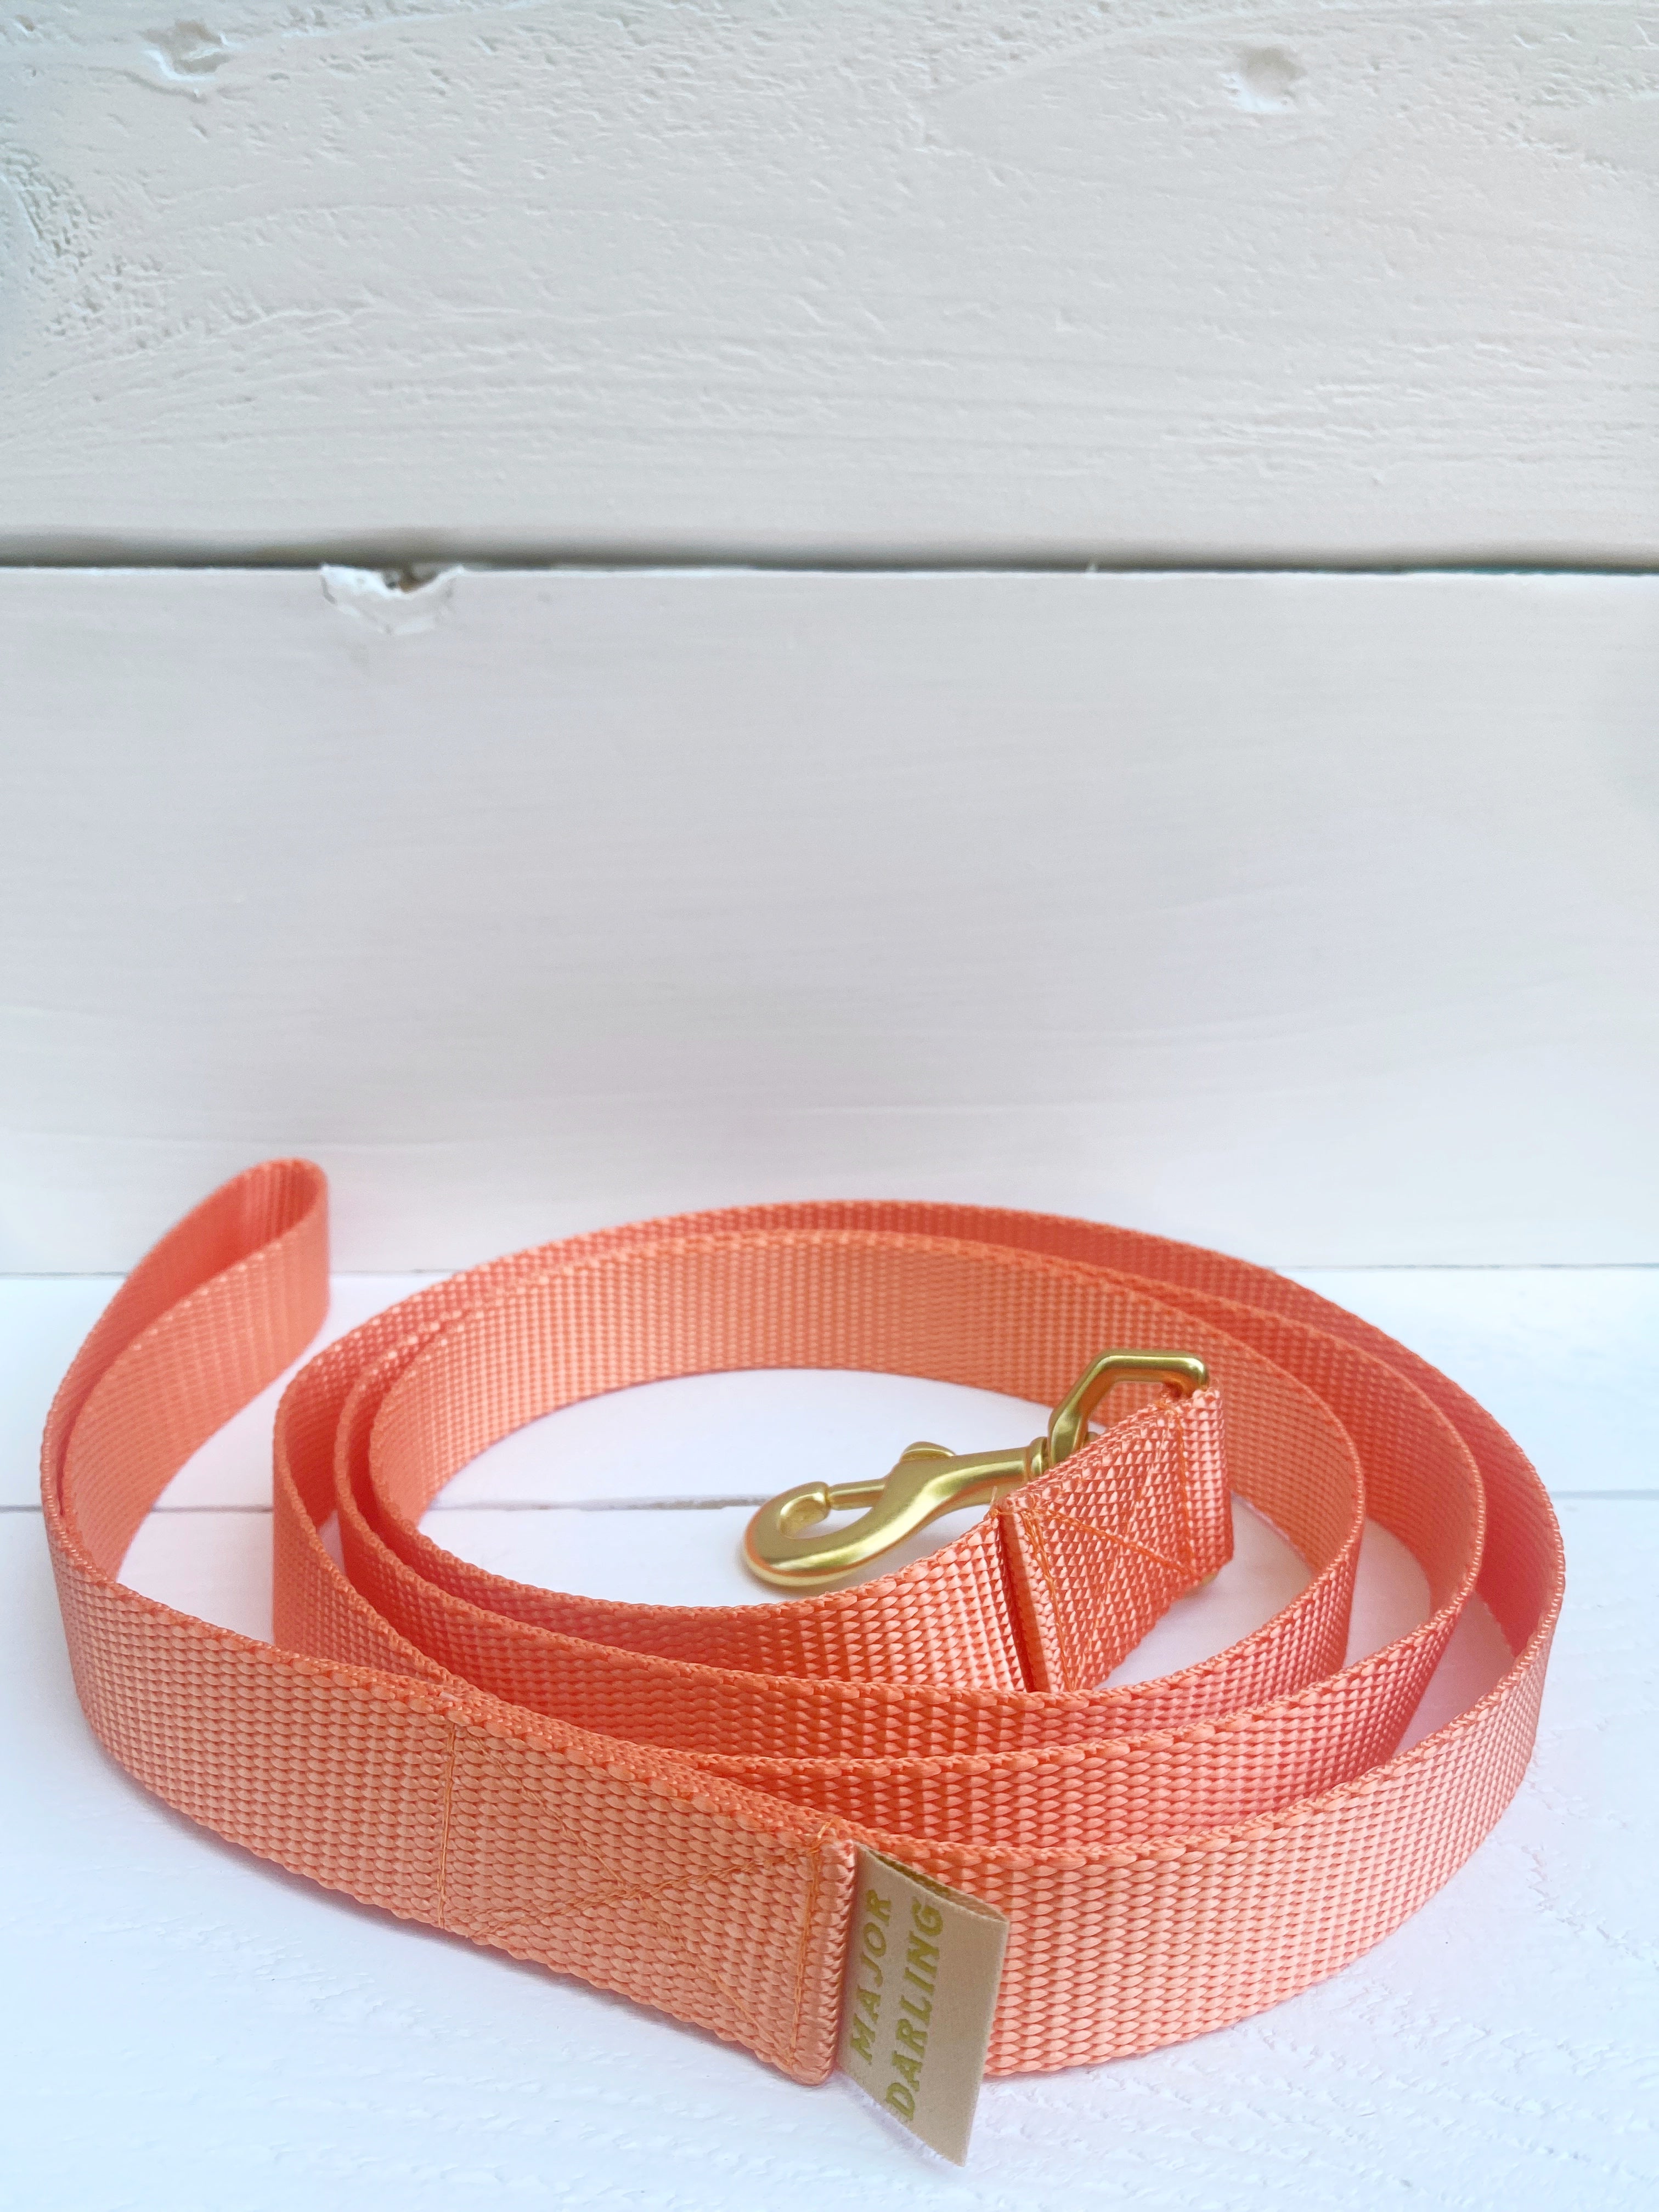 peach nylon dog leash made in Austin Texas